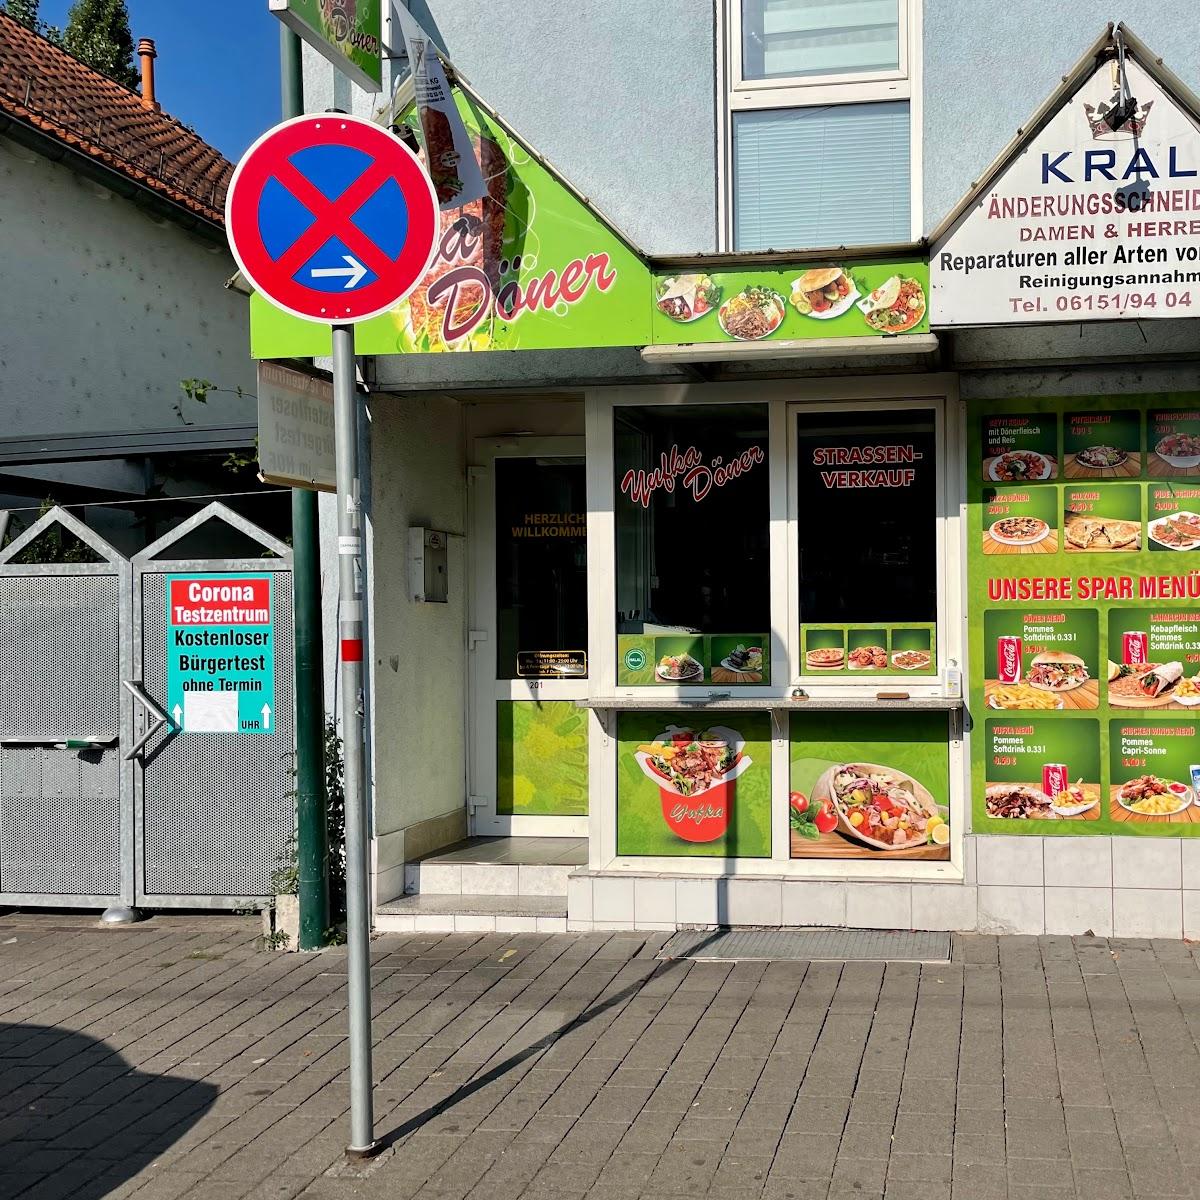 Restaurant "Yufka Döner" in Darmstadt